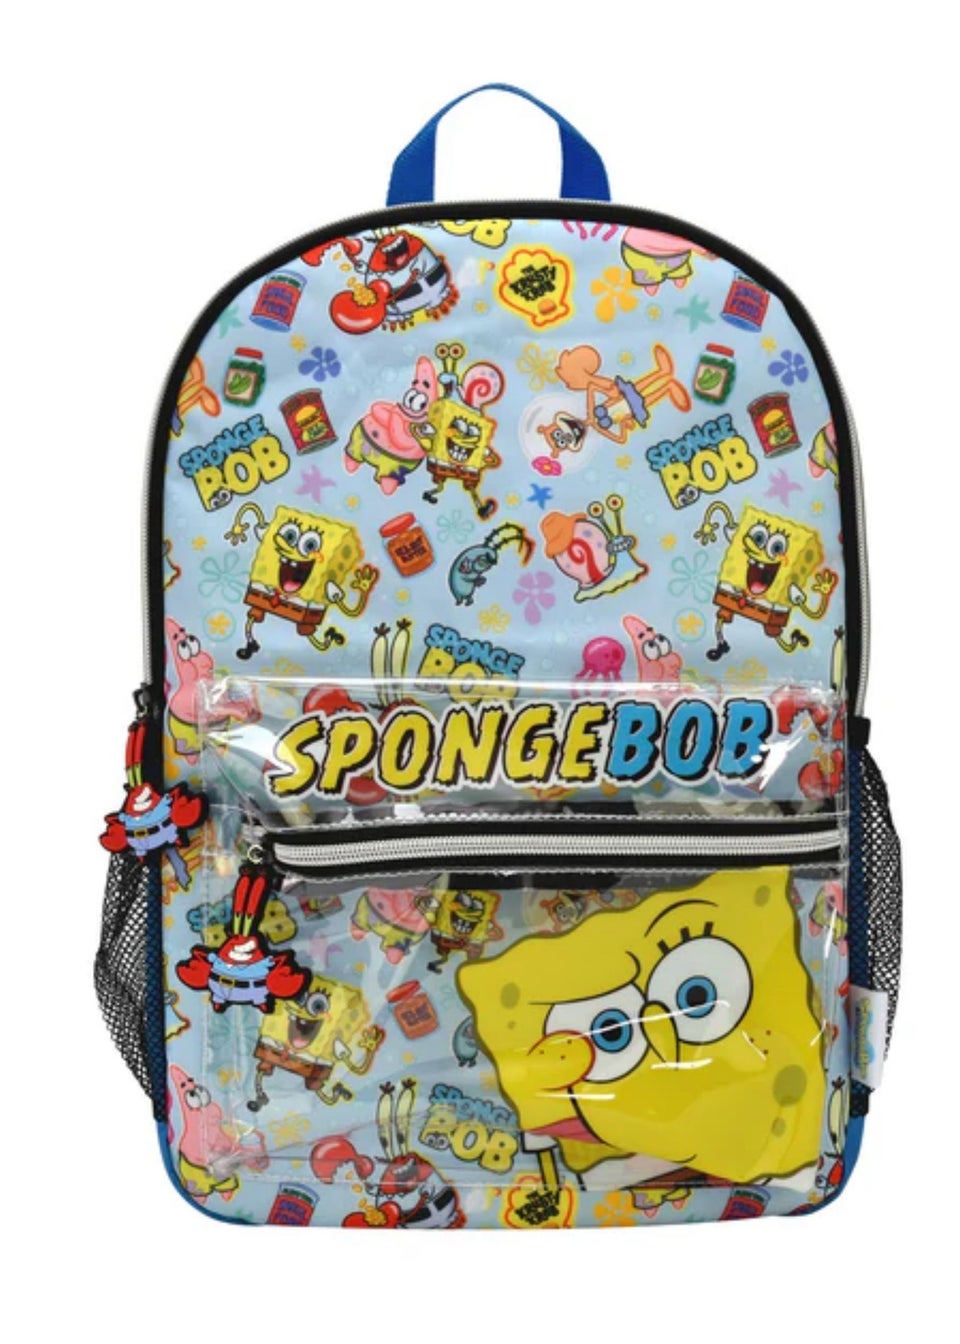 SpongeBob Backpack - Pattern